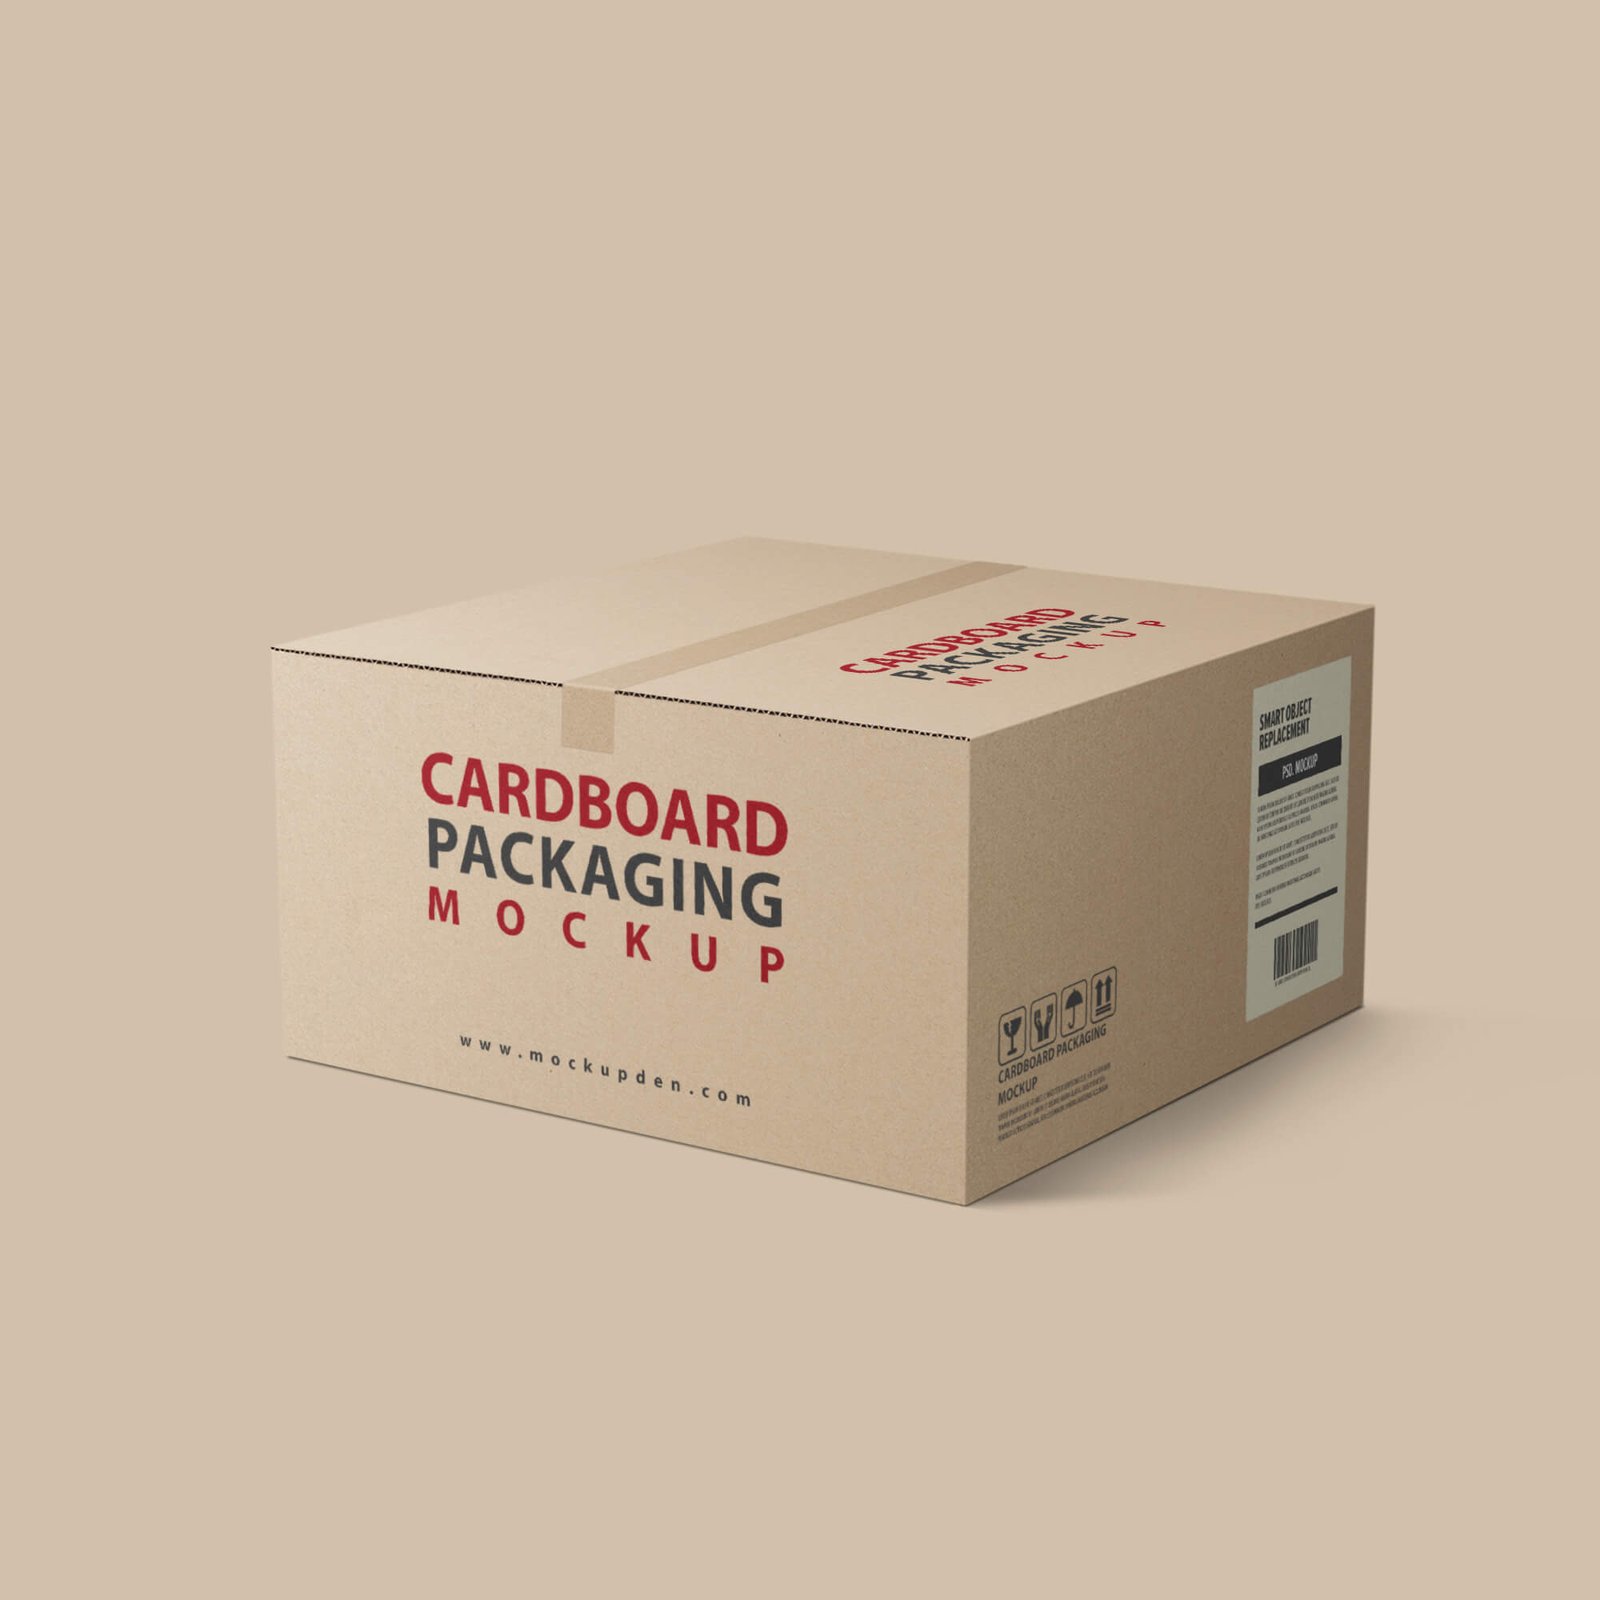 Design Free Cardboard Packaging Mockup PSD Template